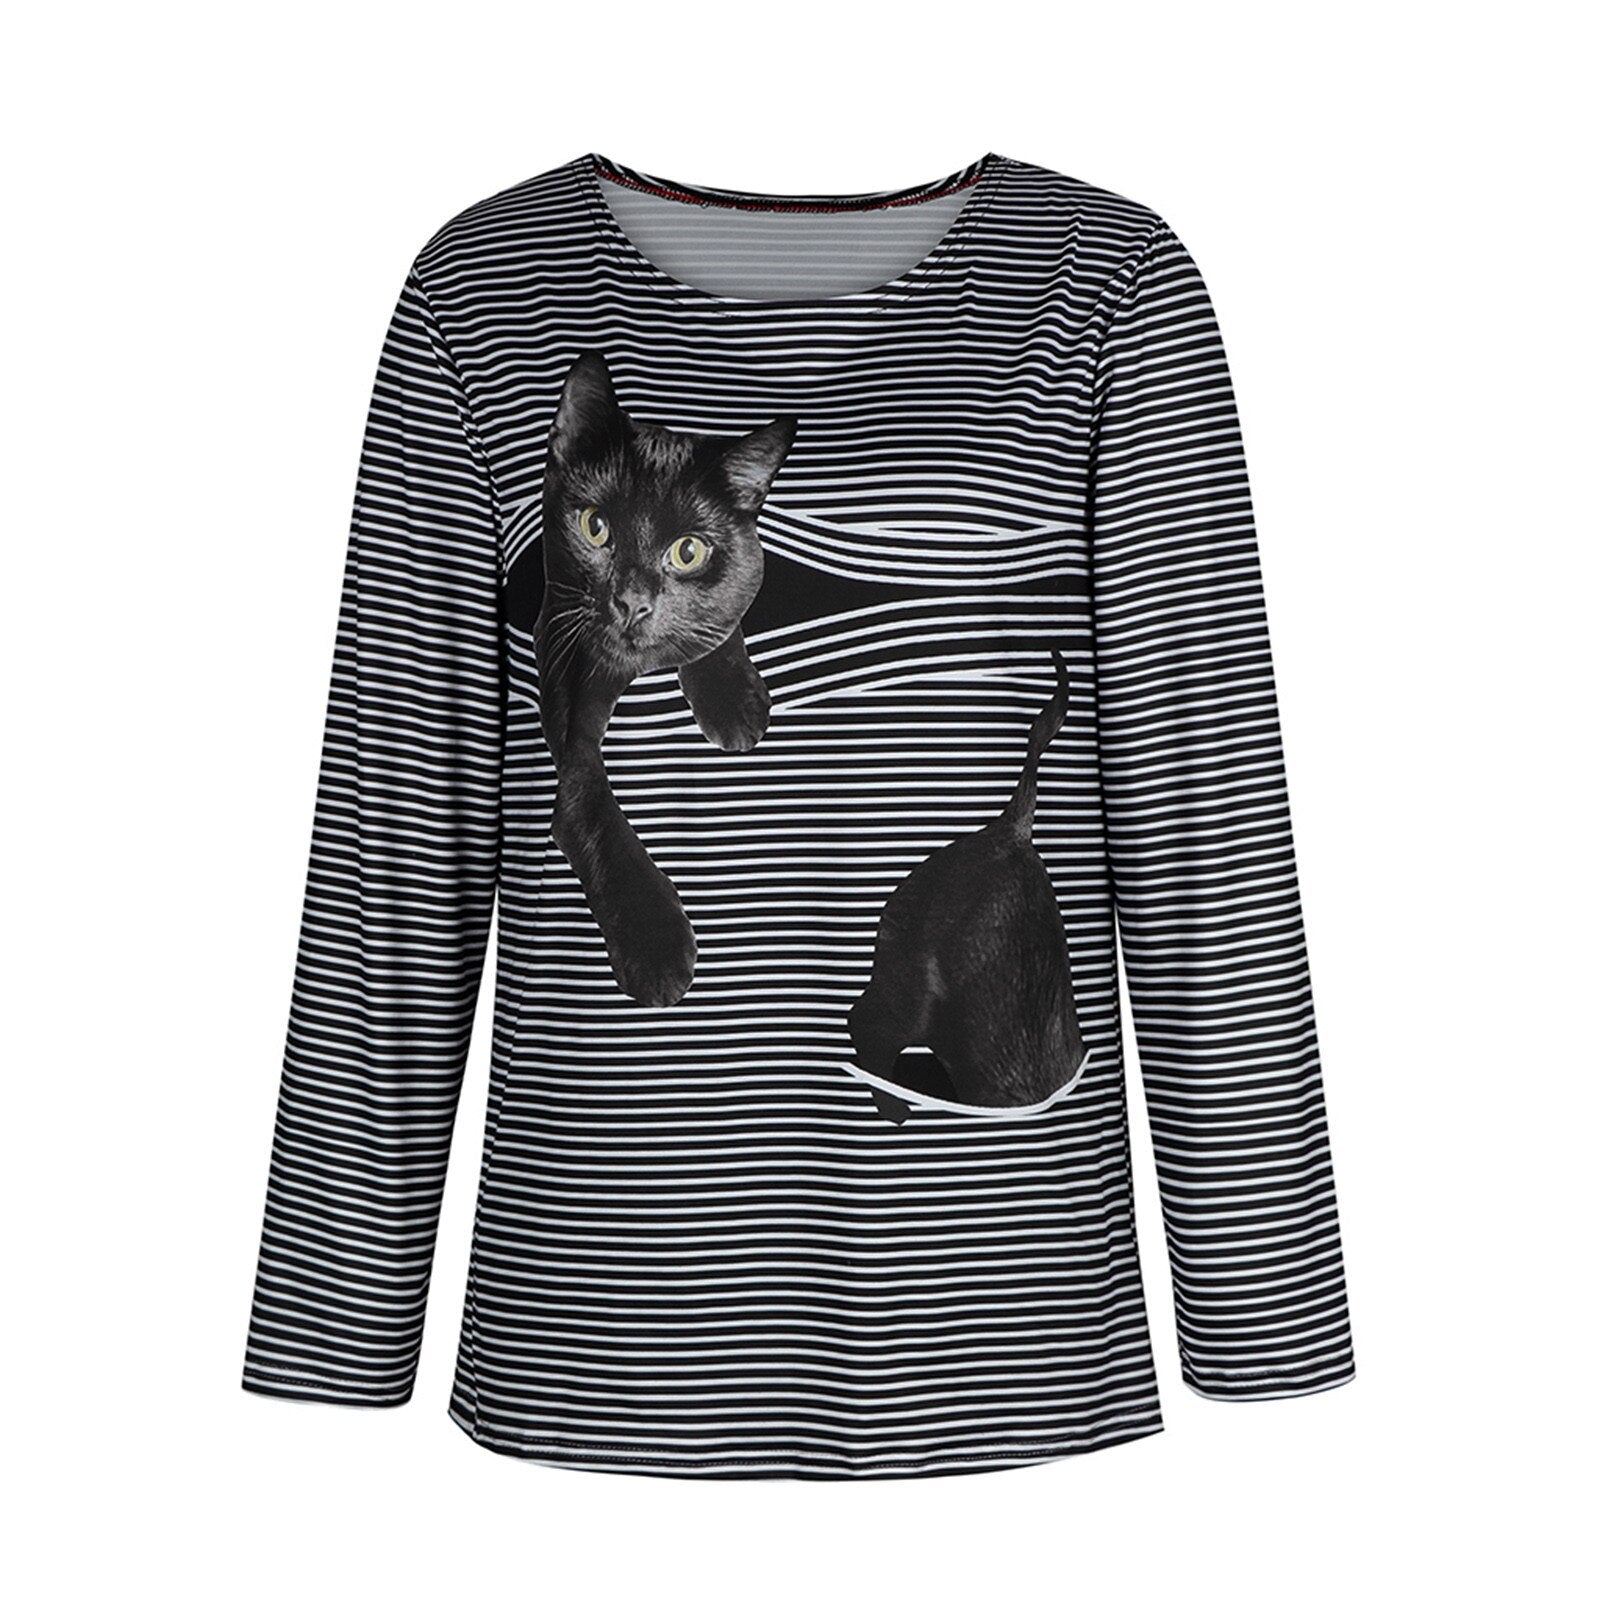 Cats in Blinds Print Women's Shirt Black